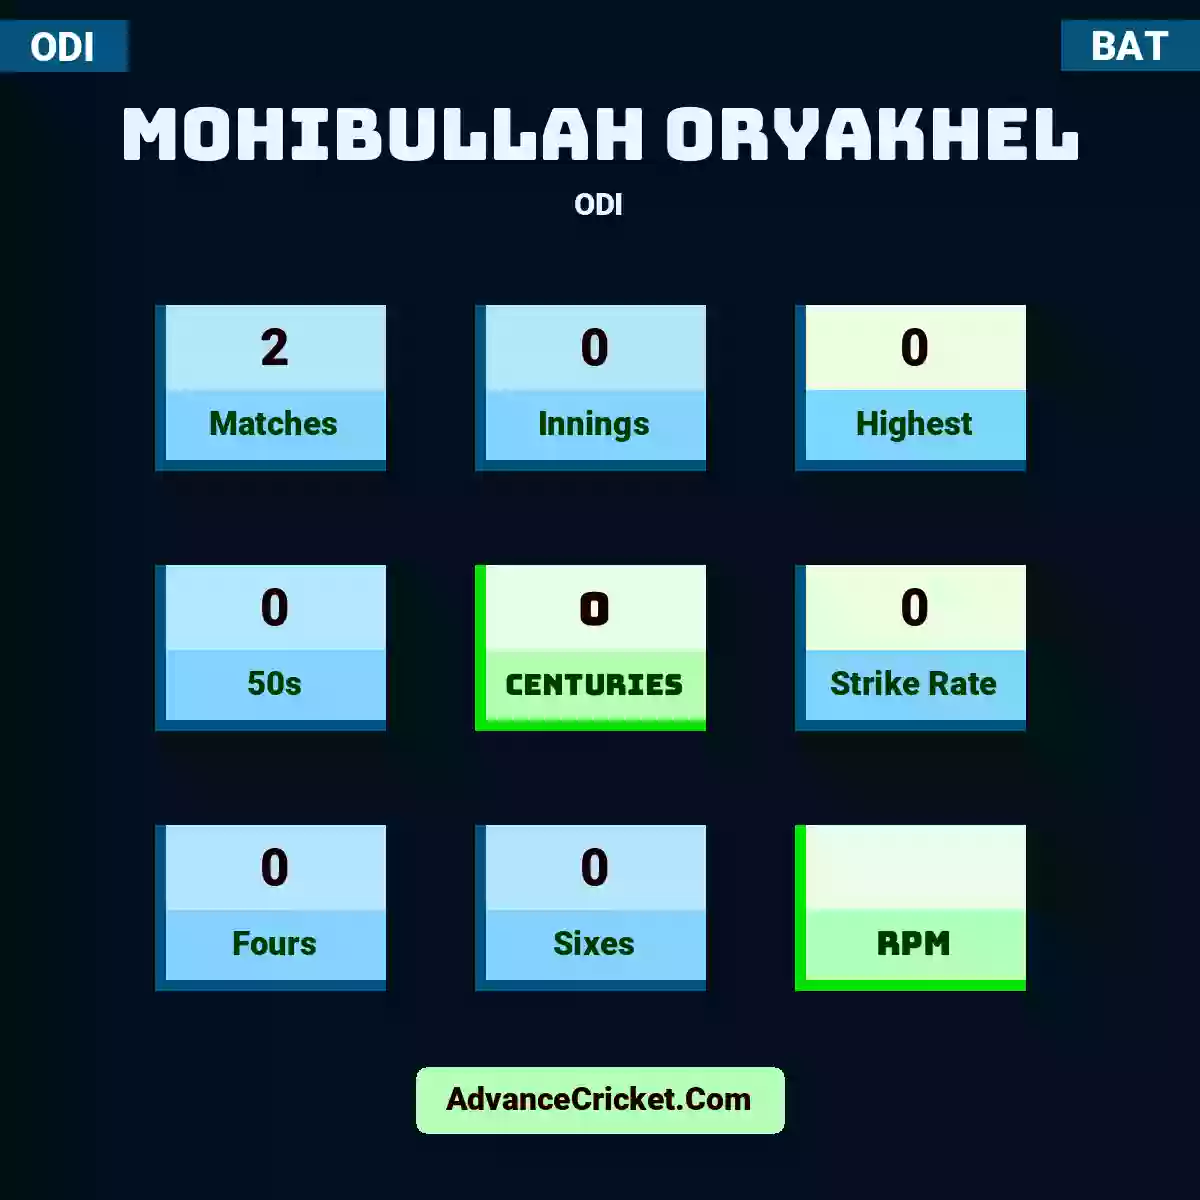 Mohibullah Oryakhel ODI , Mohibullah Oryakhel played 2 matches, scored 0 runs as highest, 0 half-centuries, and 0 centuries, with a strike rate of 0. M.Oryakhel hit 0 fours and 0 sixes.